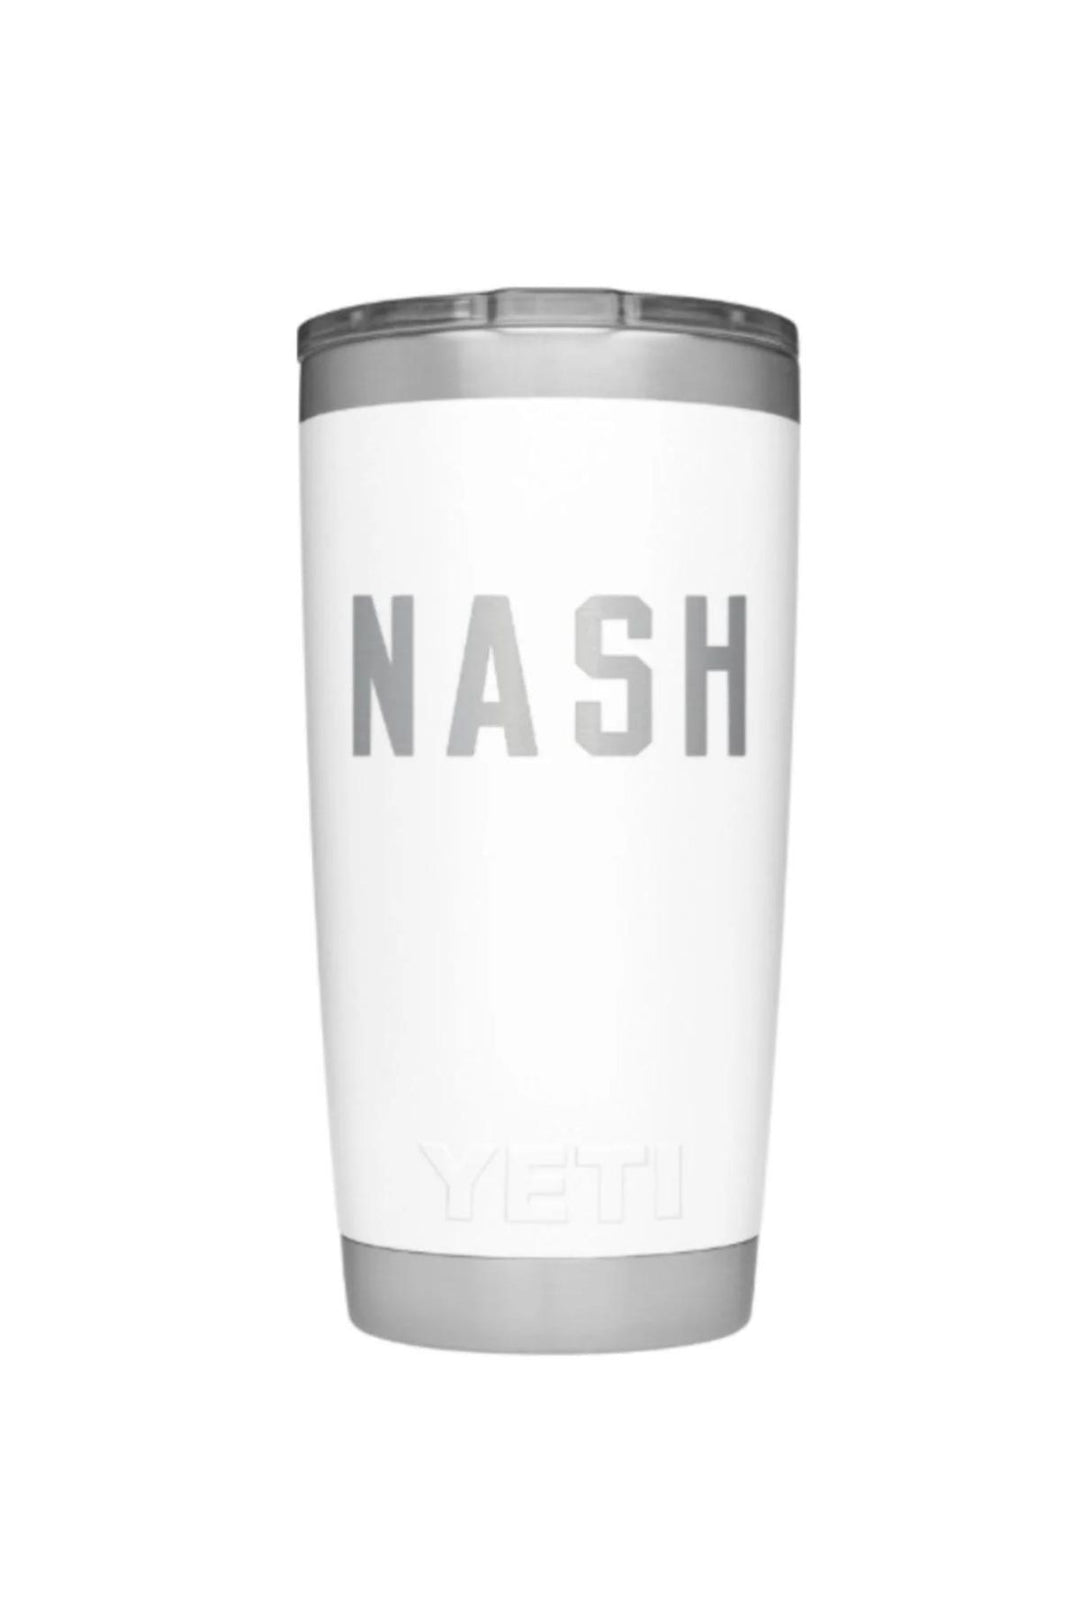 Yeti 24oz Mug[Rescue Red] – The Nash Collection